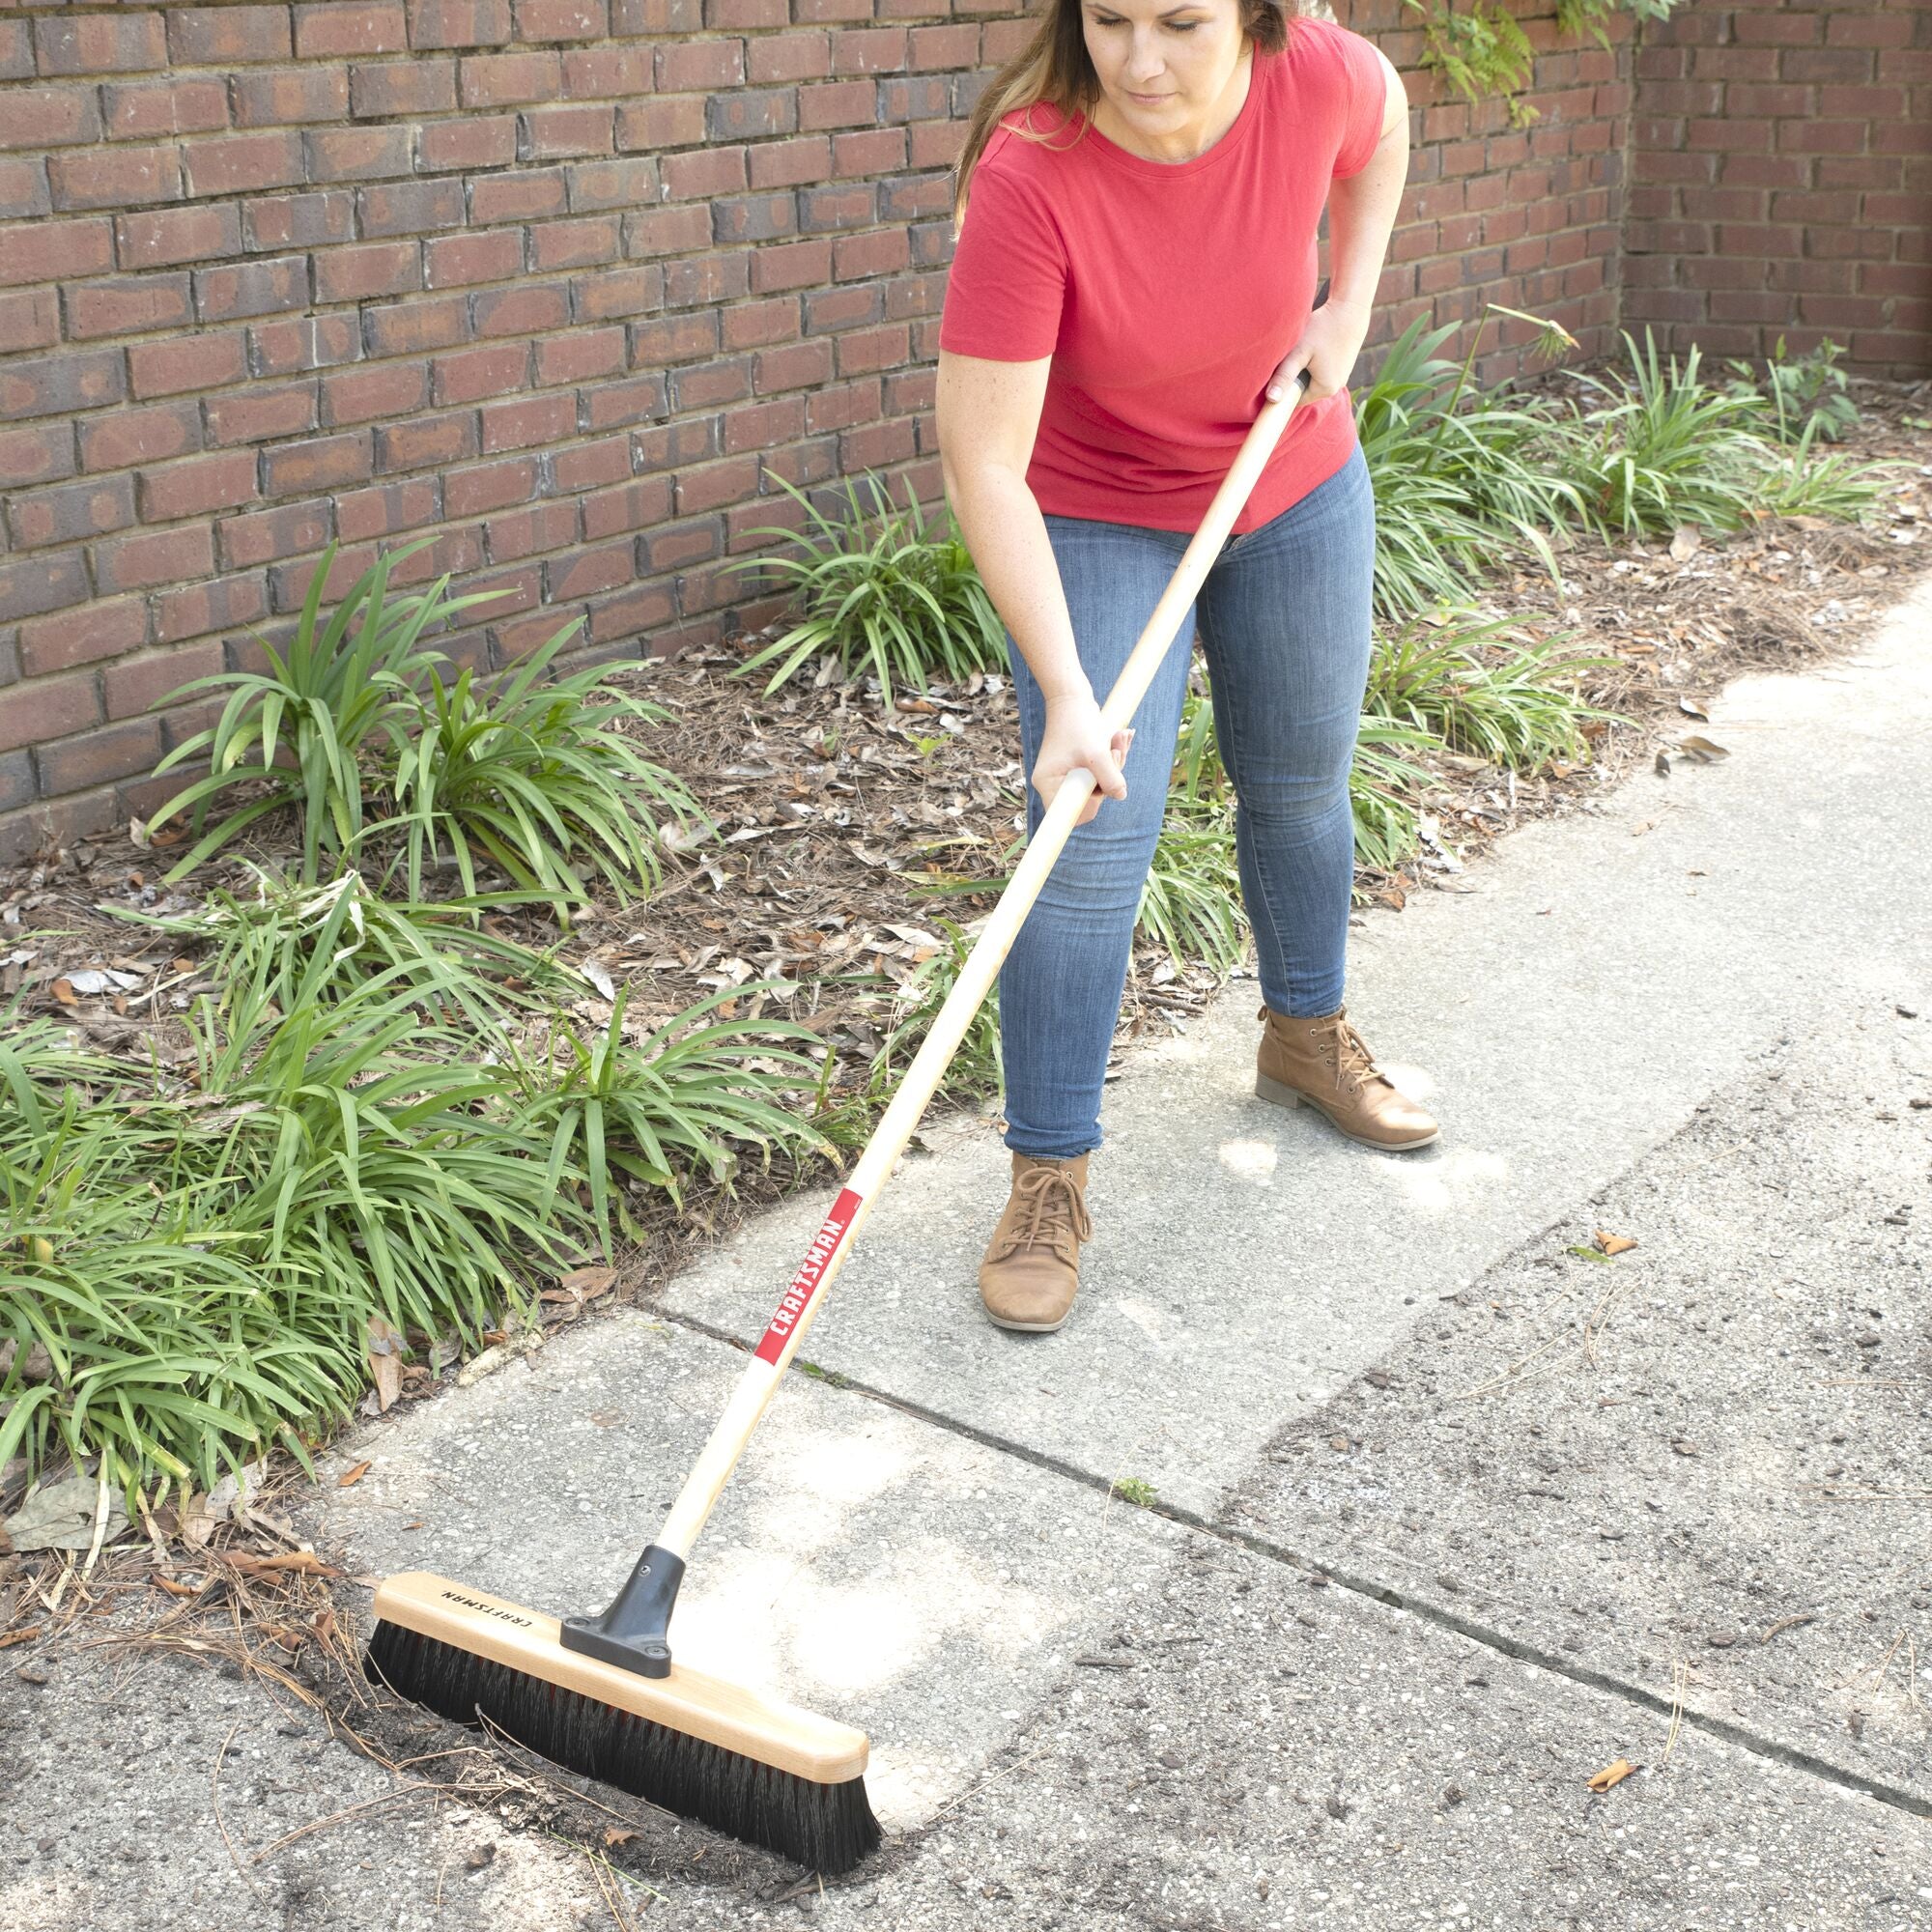 18 inch all-purpose push broom cleaning dirt off sidewalk